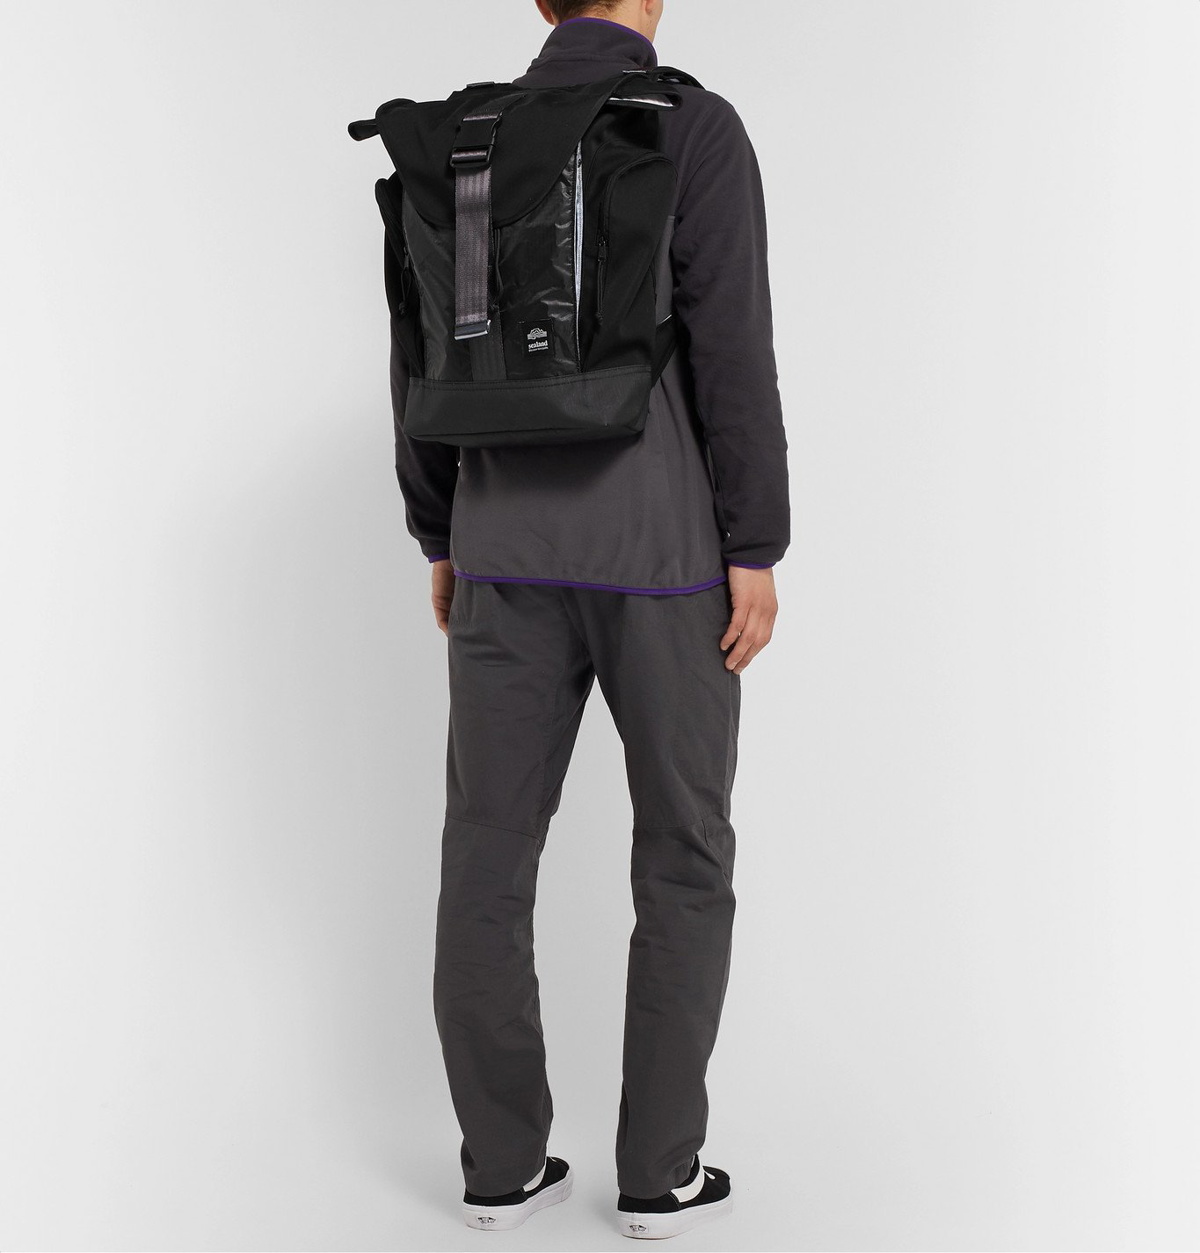 Sealand Gear - Roamer Canvas and Ripstop Backpack - Black Sealand Gear